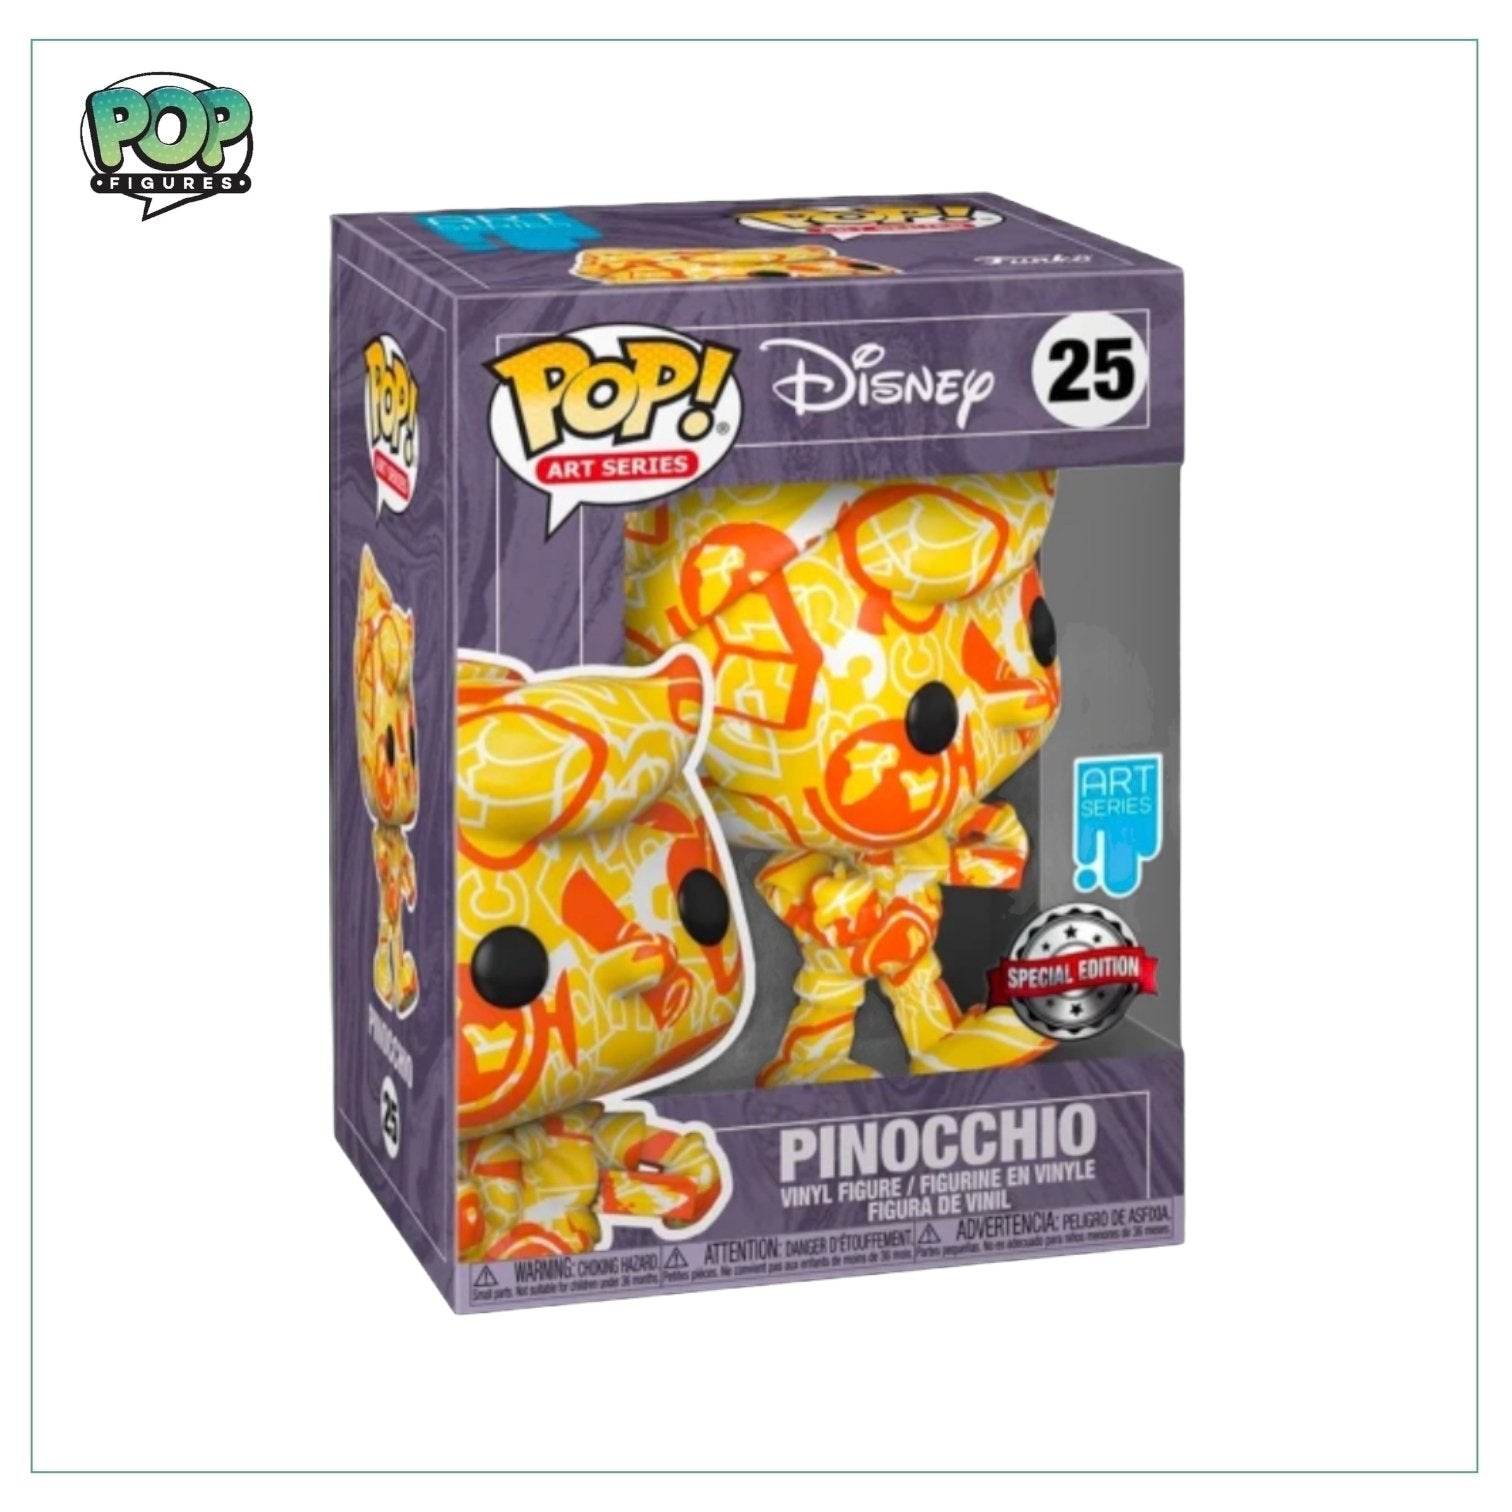 Pinocchio #25 Funko Pop! - Disney Art Series - Special Edition